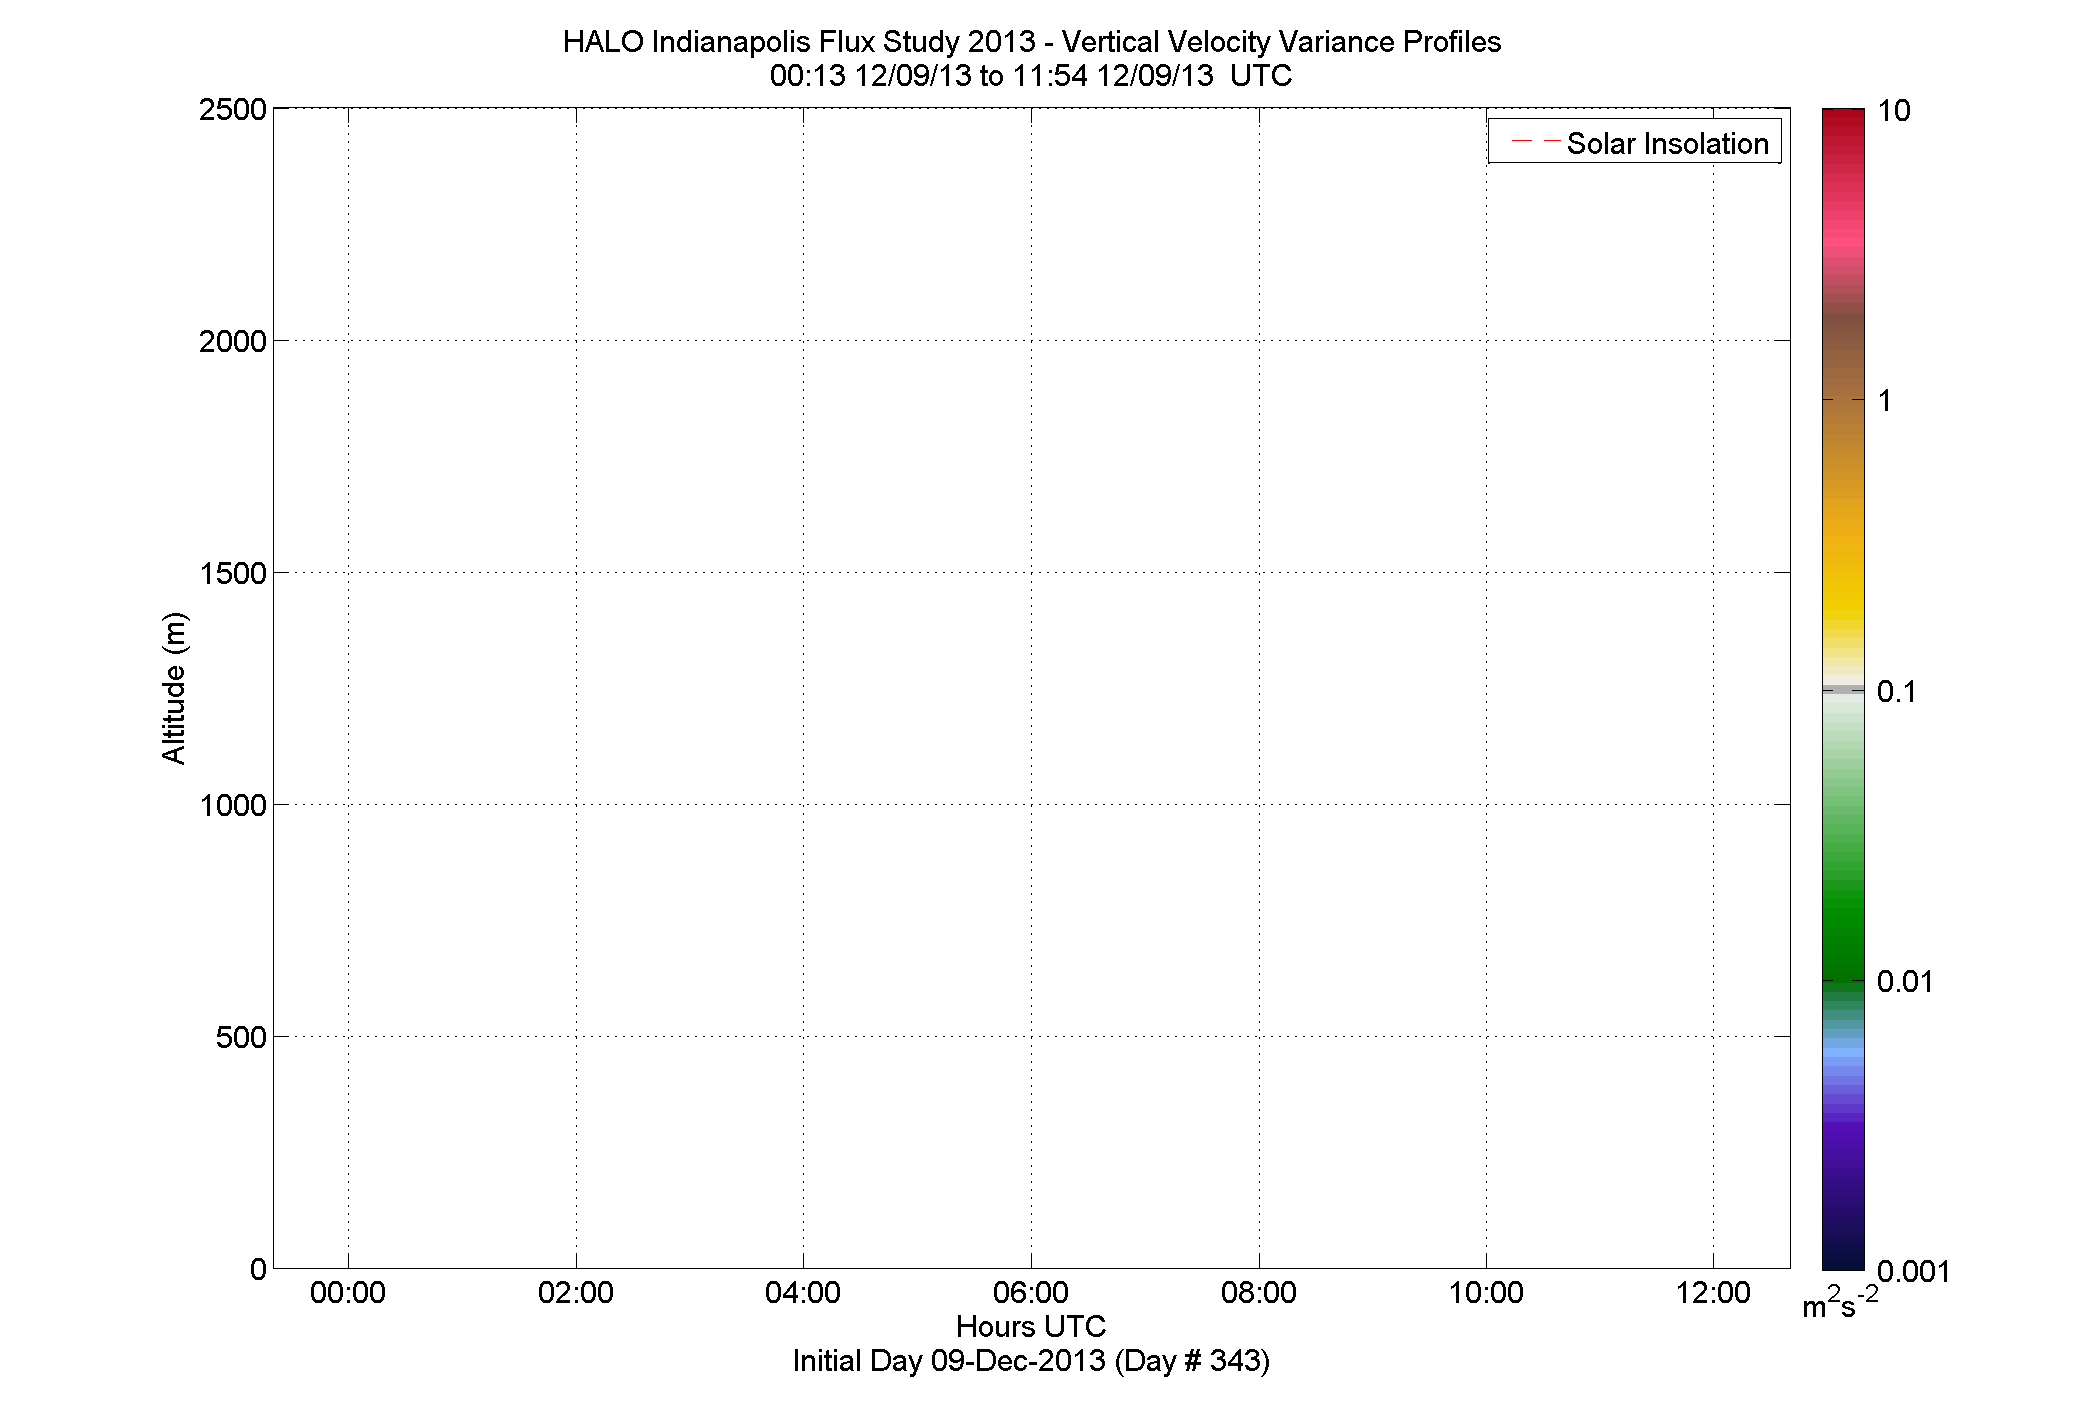 HALO vertical velocity variance profile - December 9 am